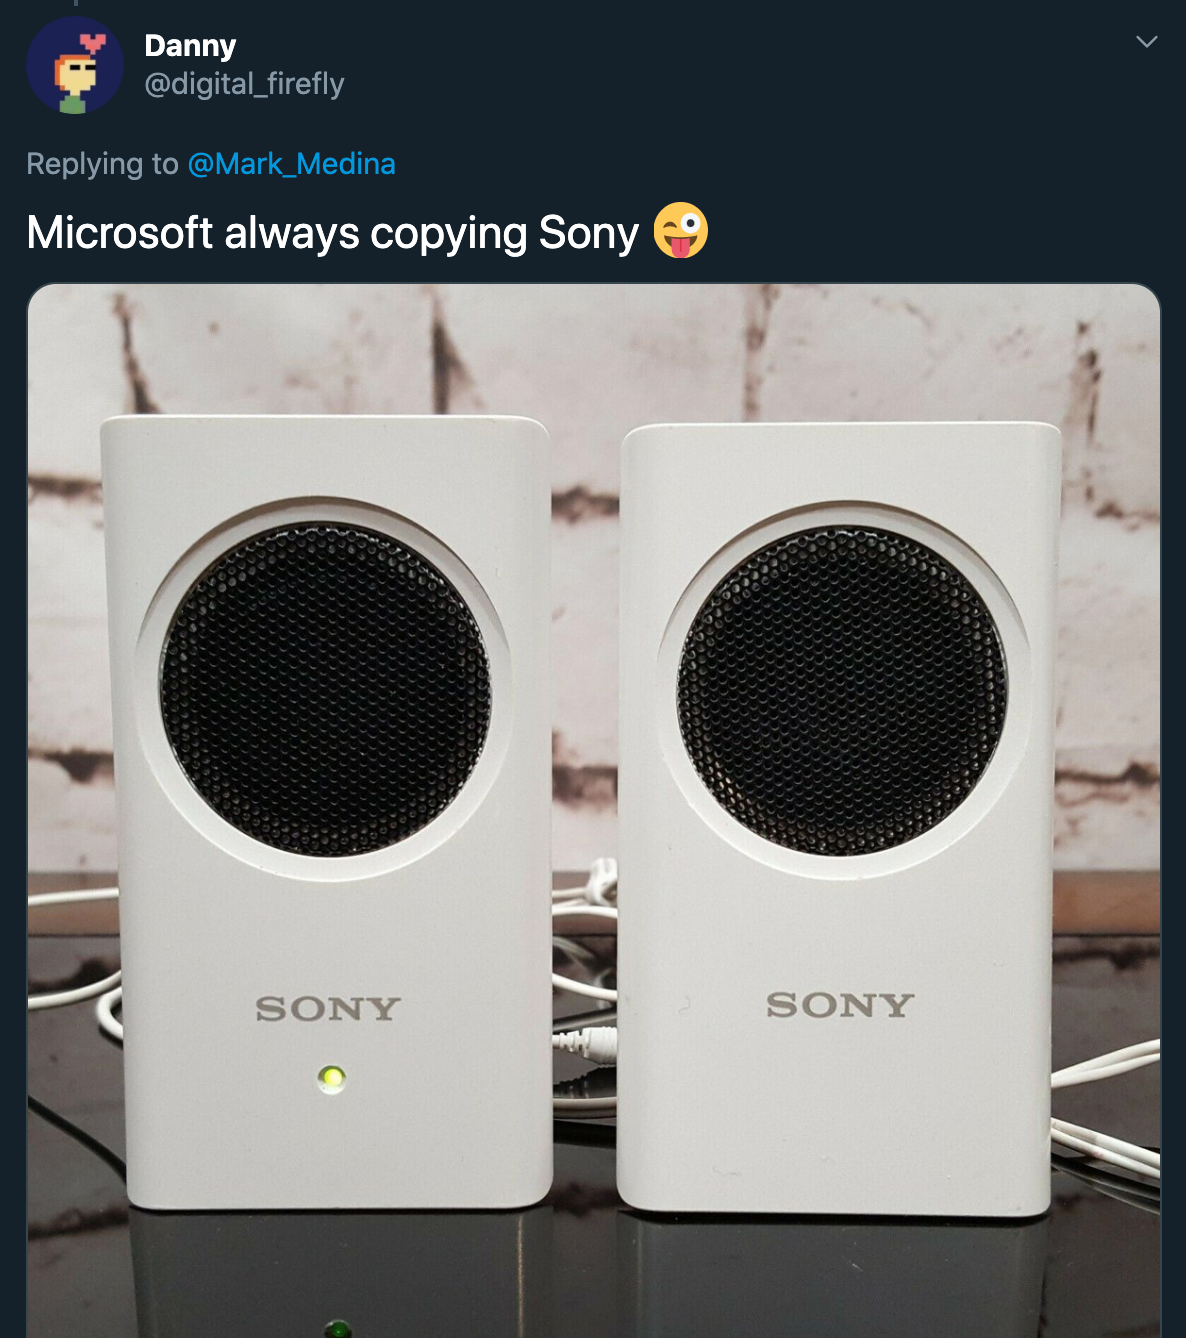 Microsoft always copying Sony